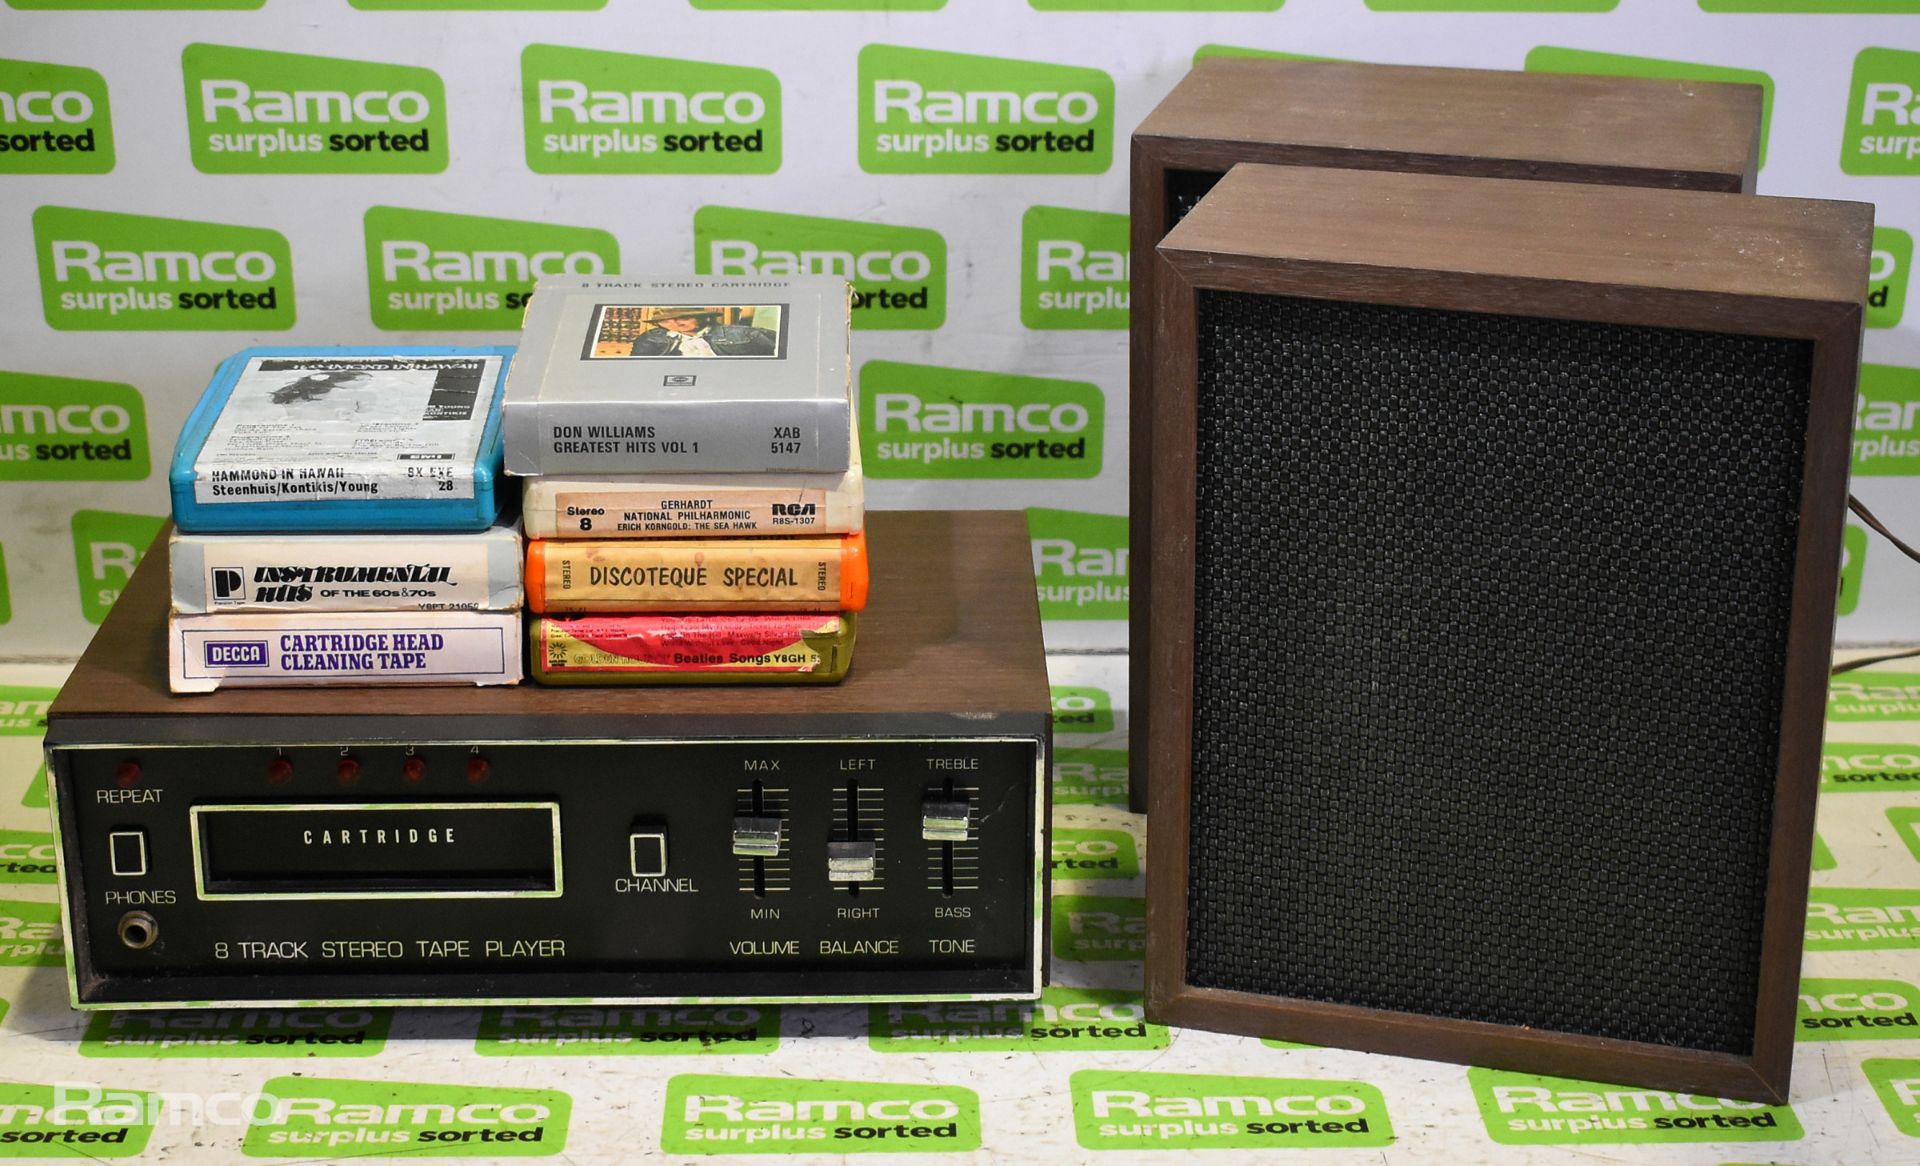 Model-I-803 8 track stereo tape player